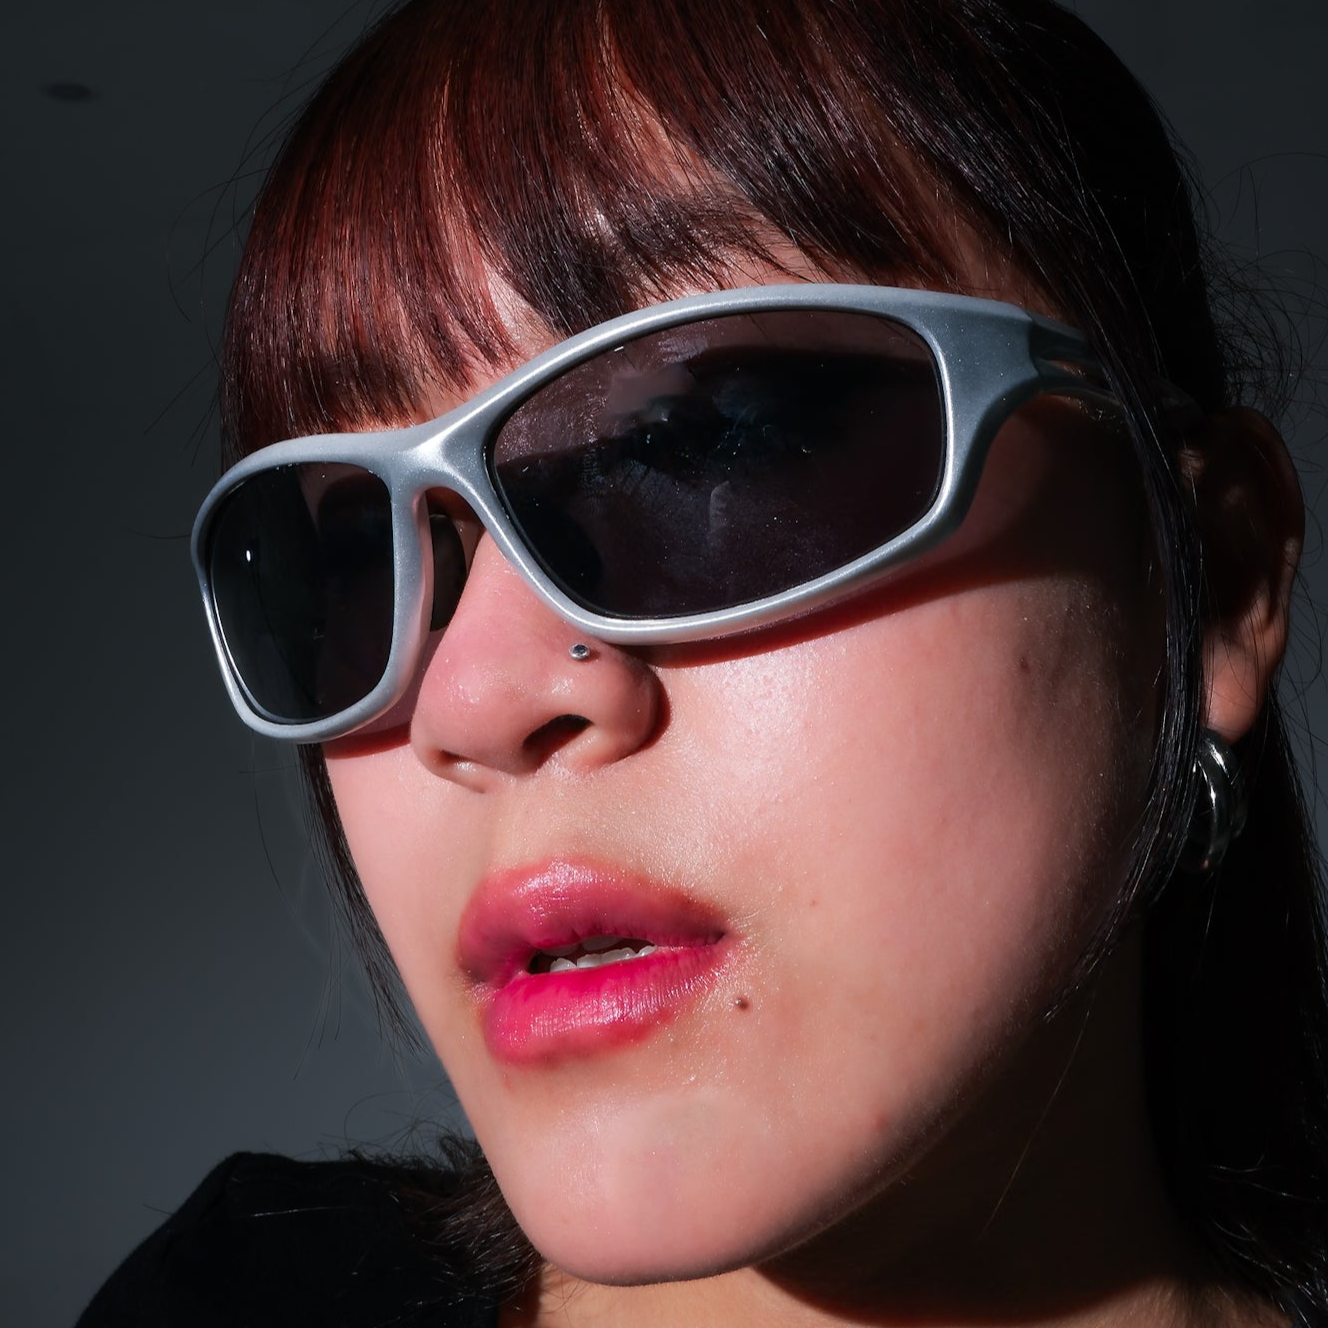 [ Solarix ] Silver Wraparound Sunglasses - projectshades